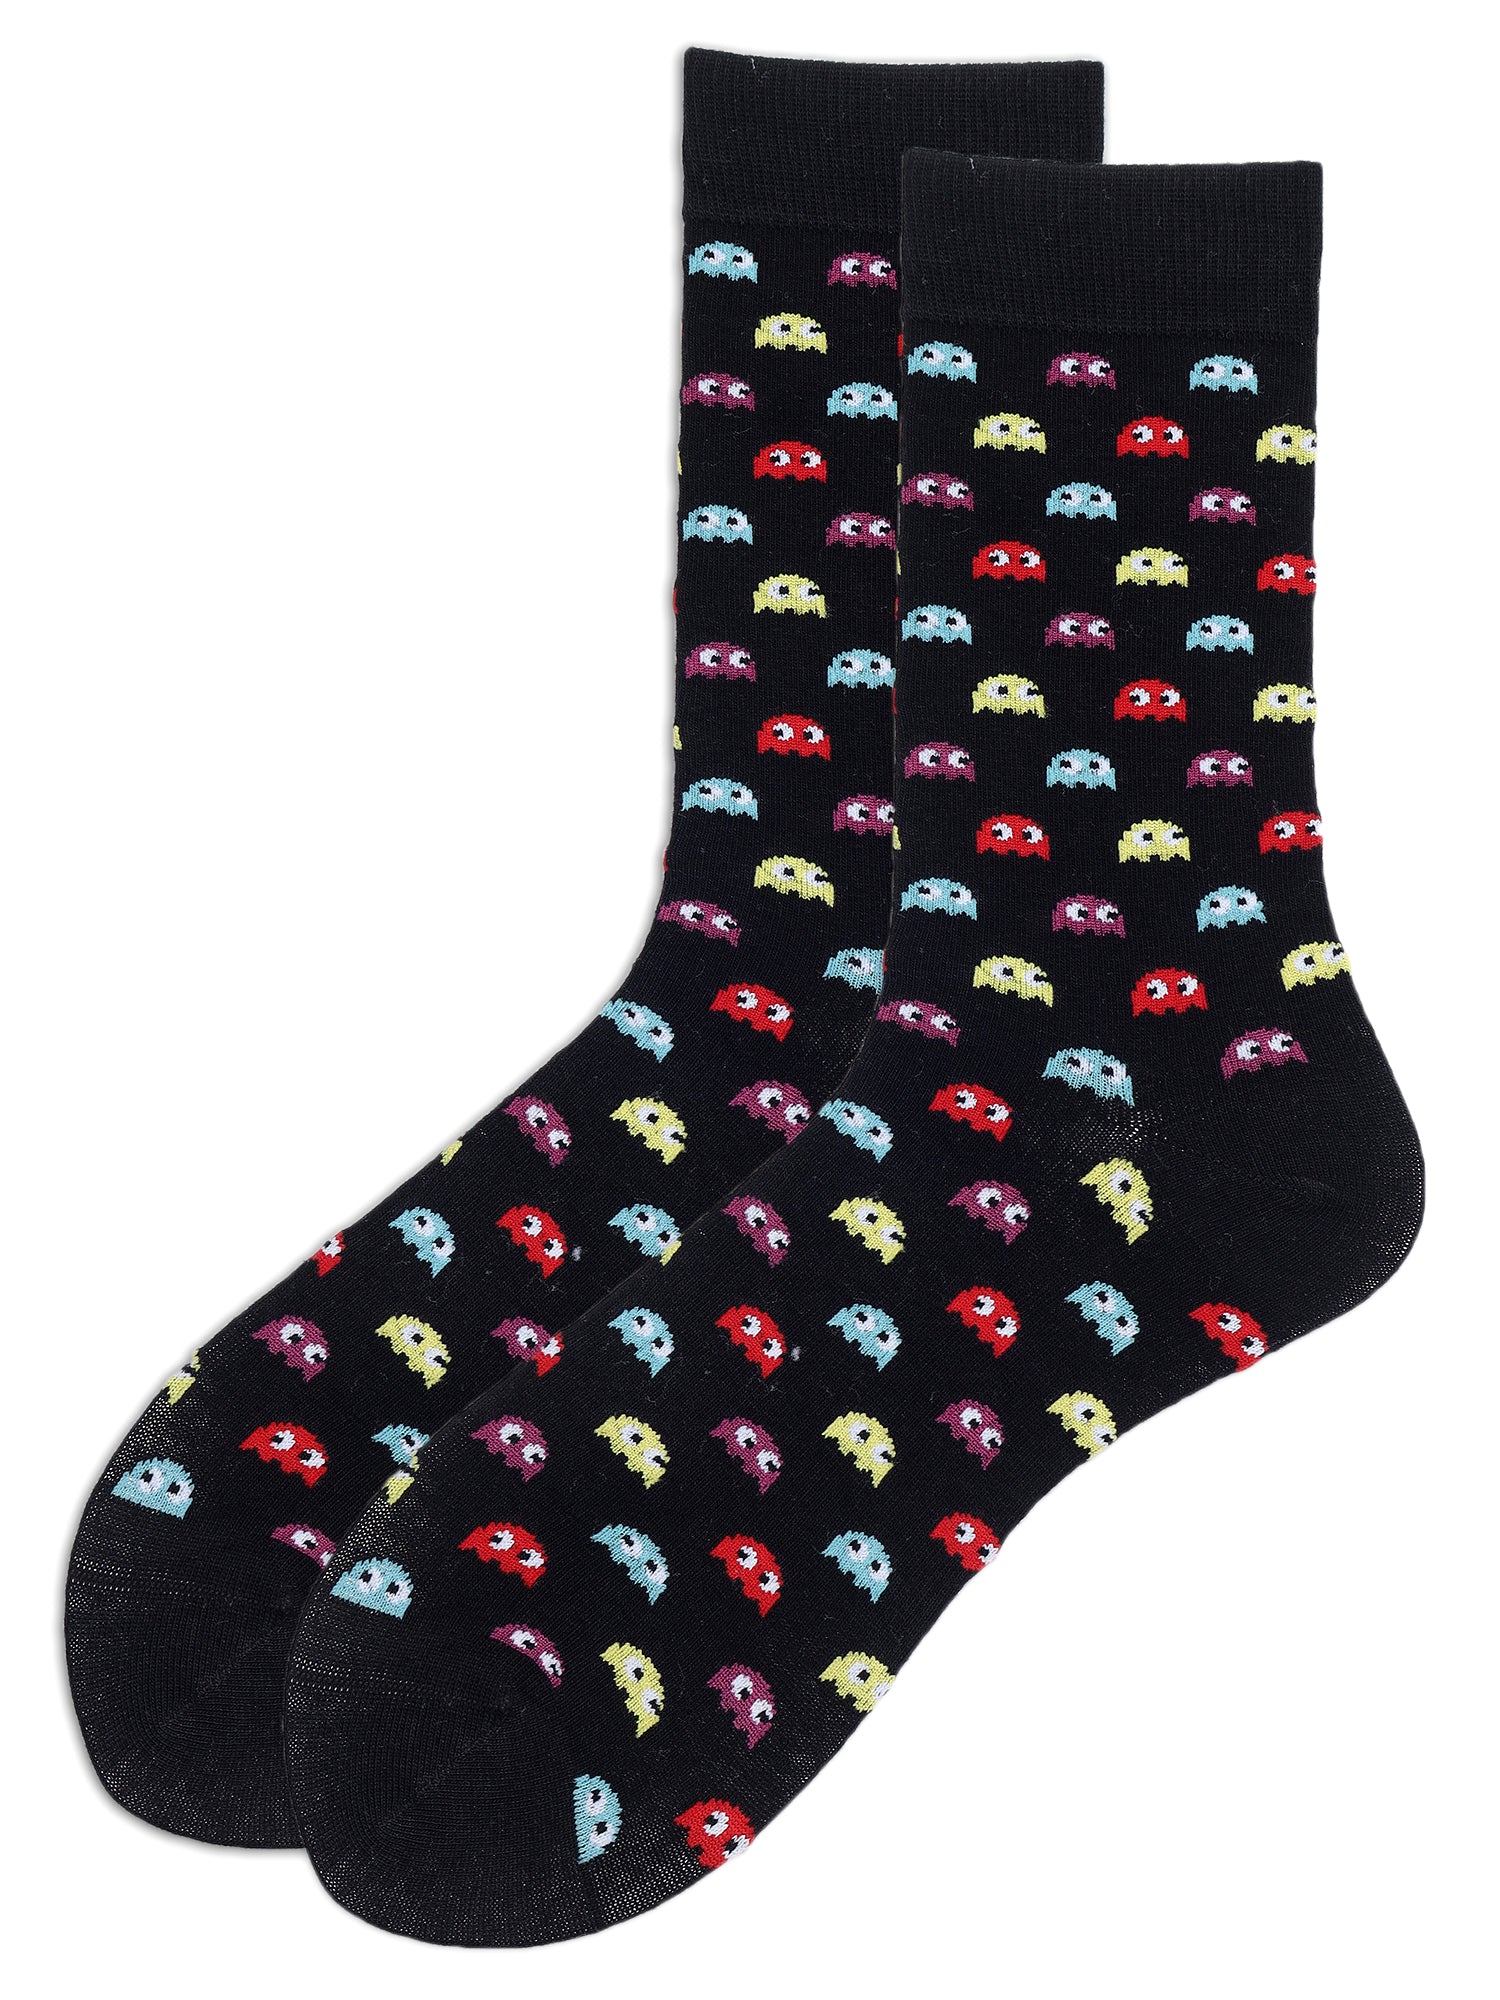 Pacman Socks